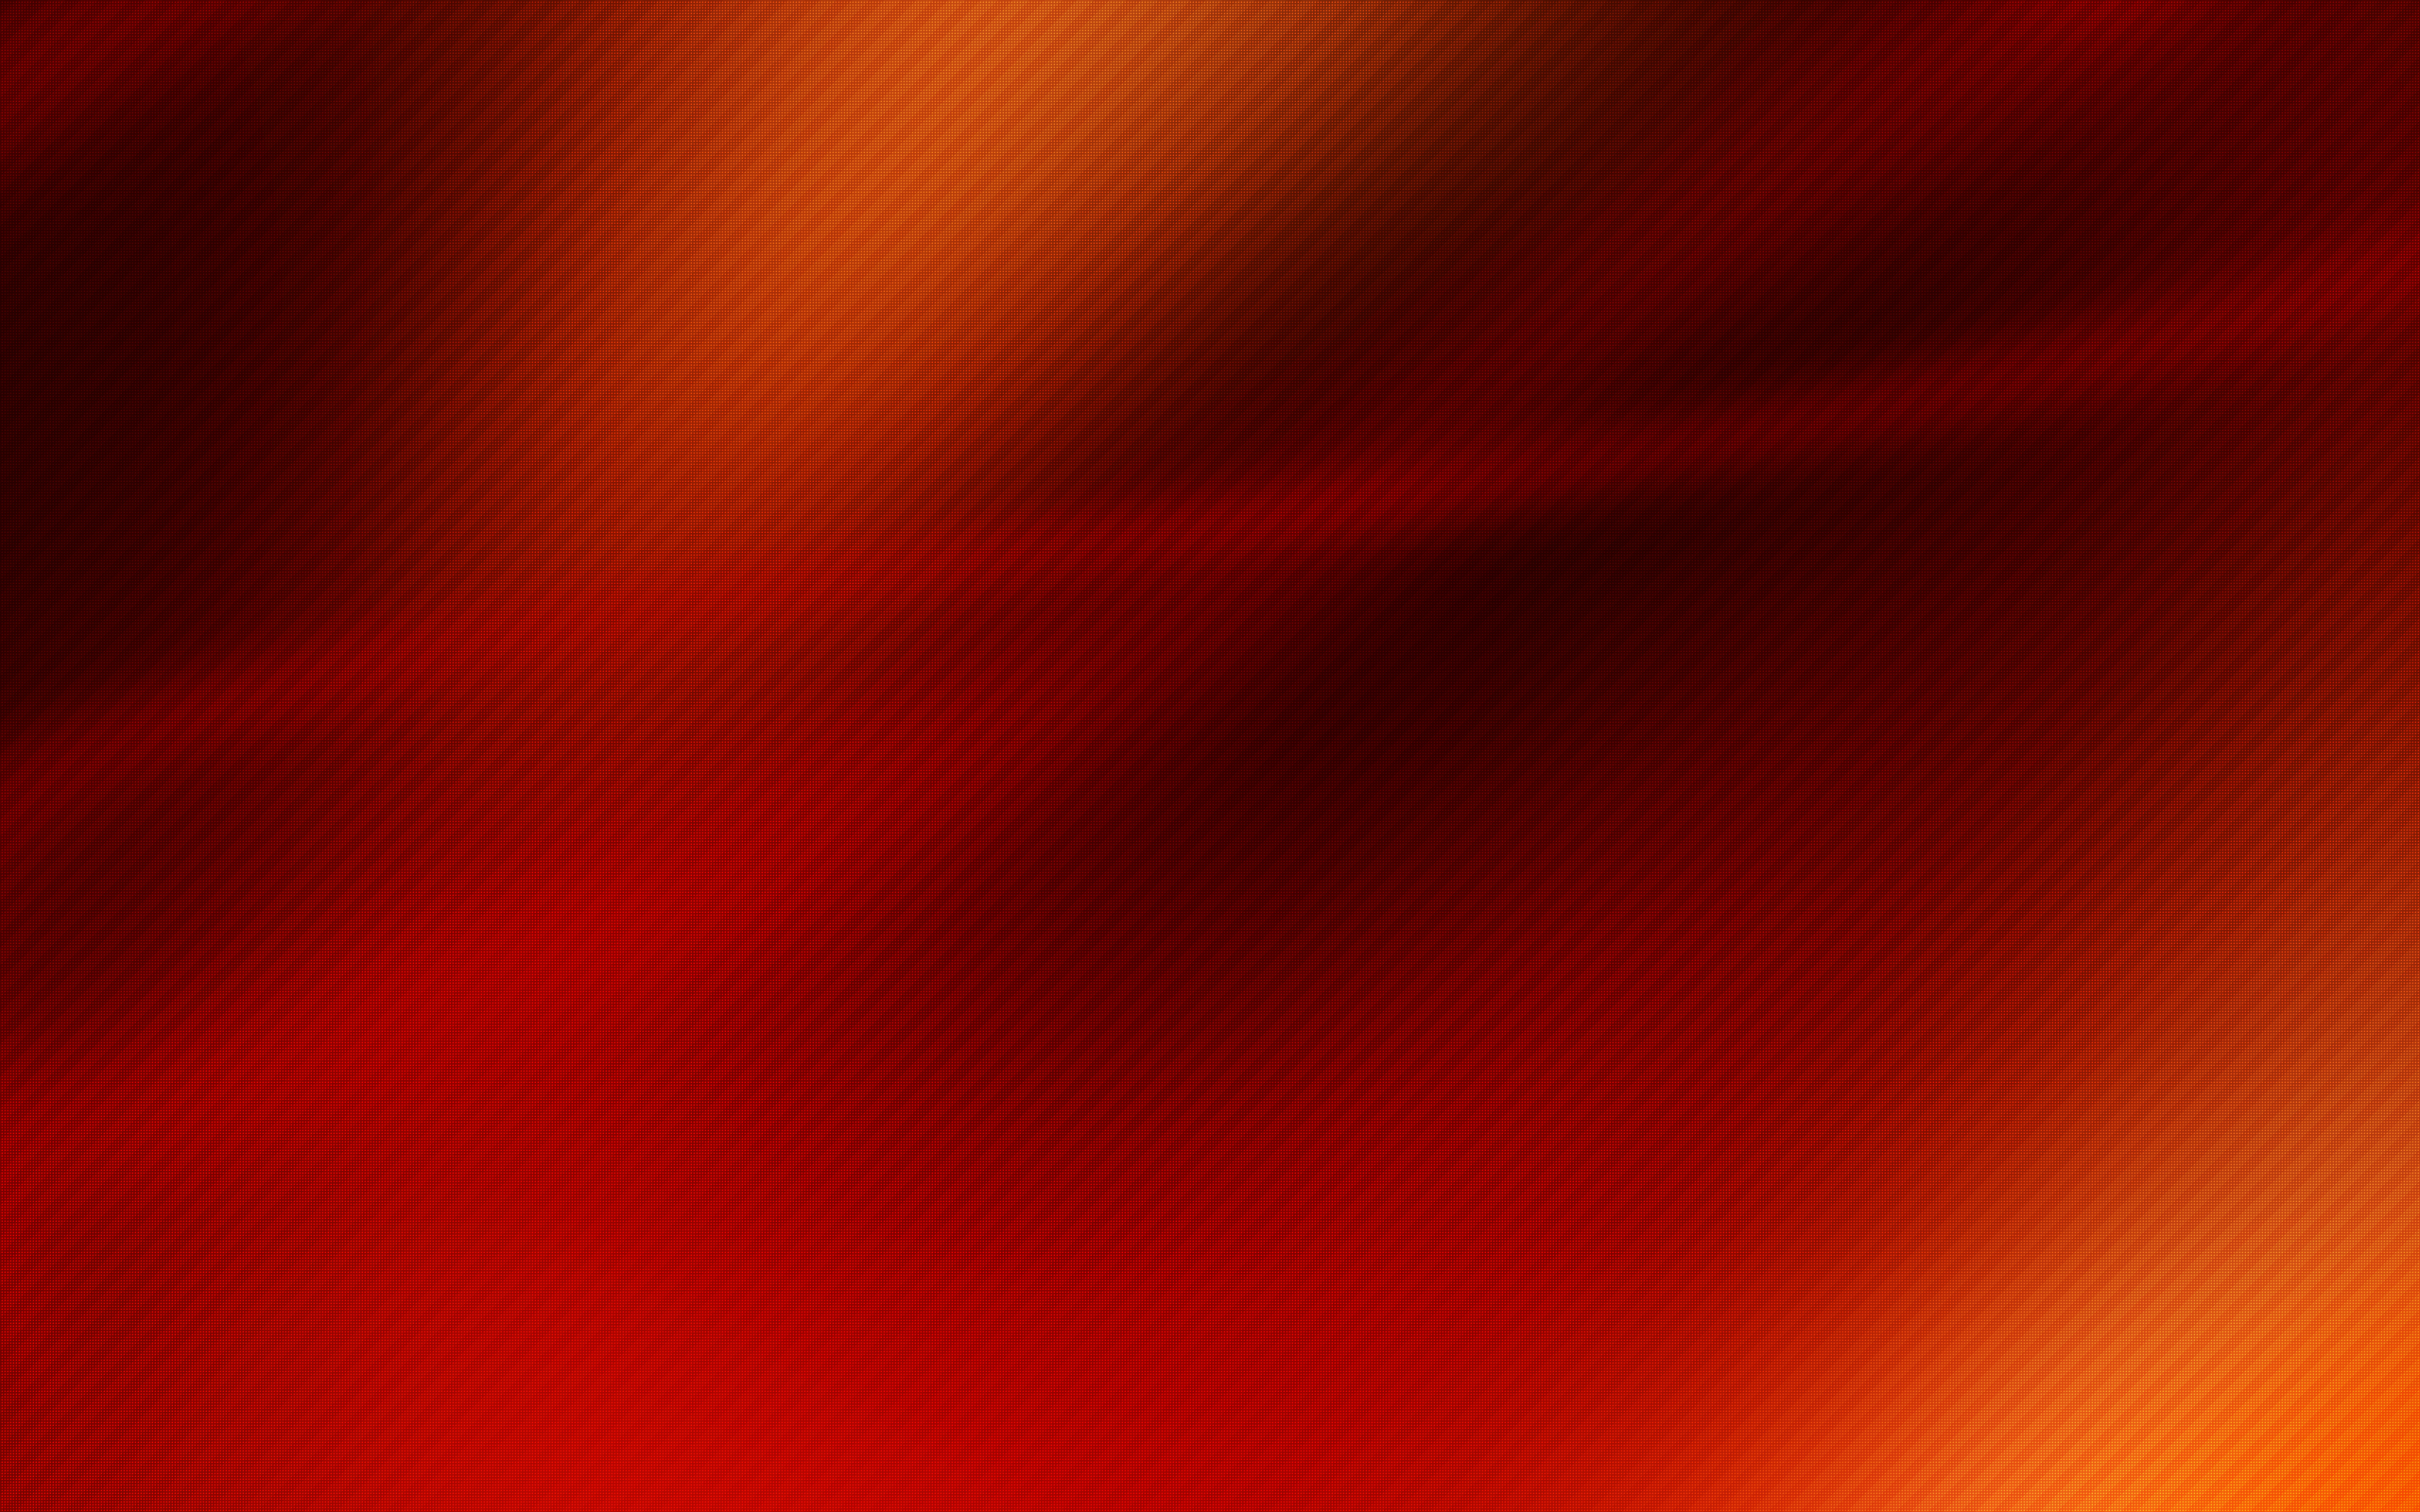 Red And Black Hd Backgrounds 20 Desktop Wallpaper ...